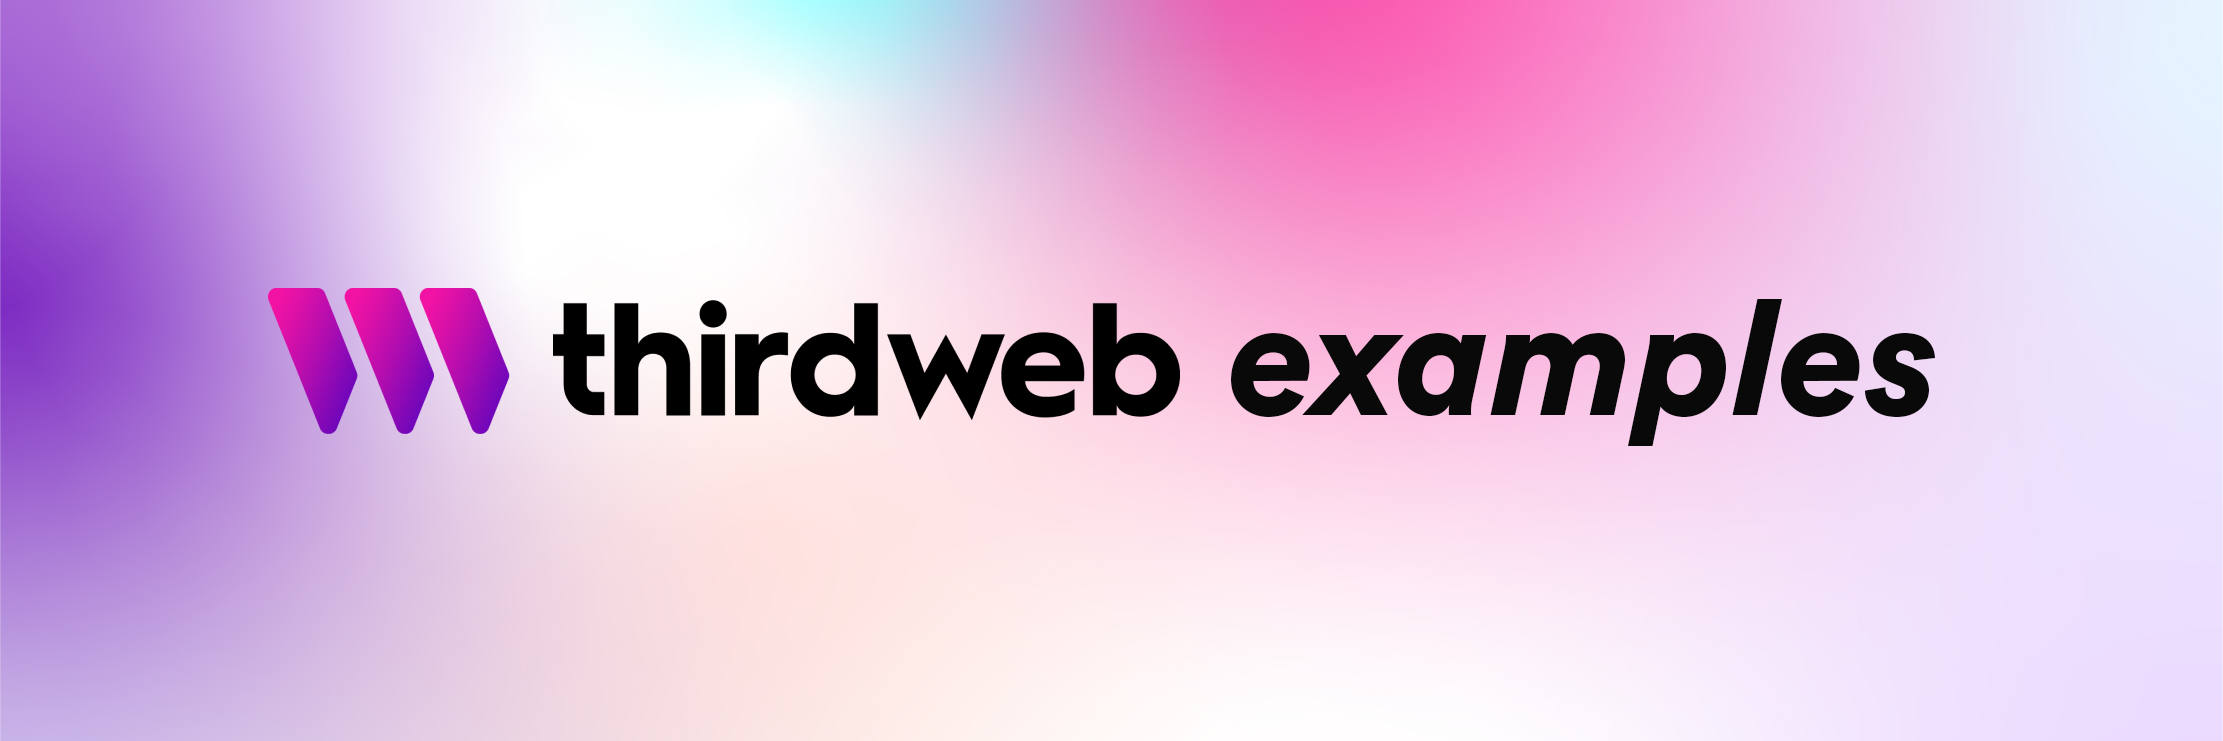 Thirdweb Examples Header